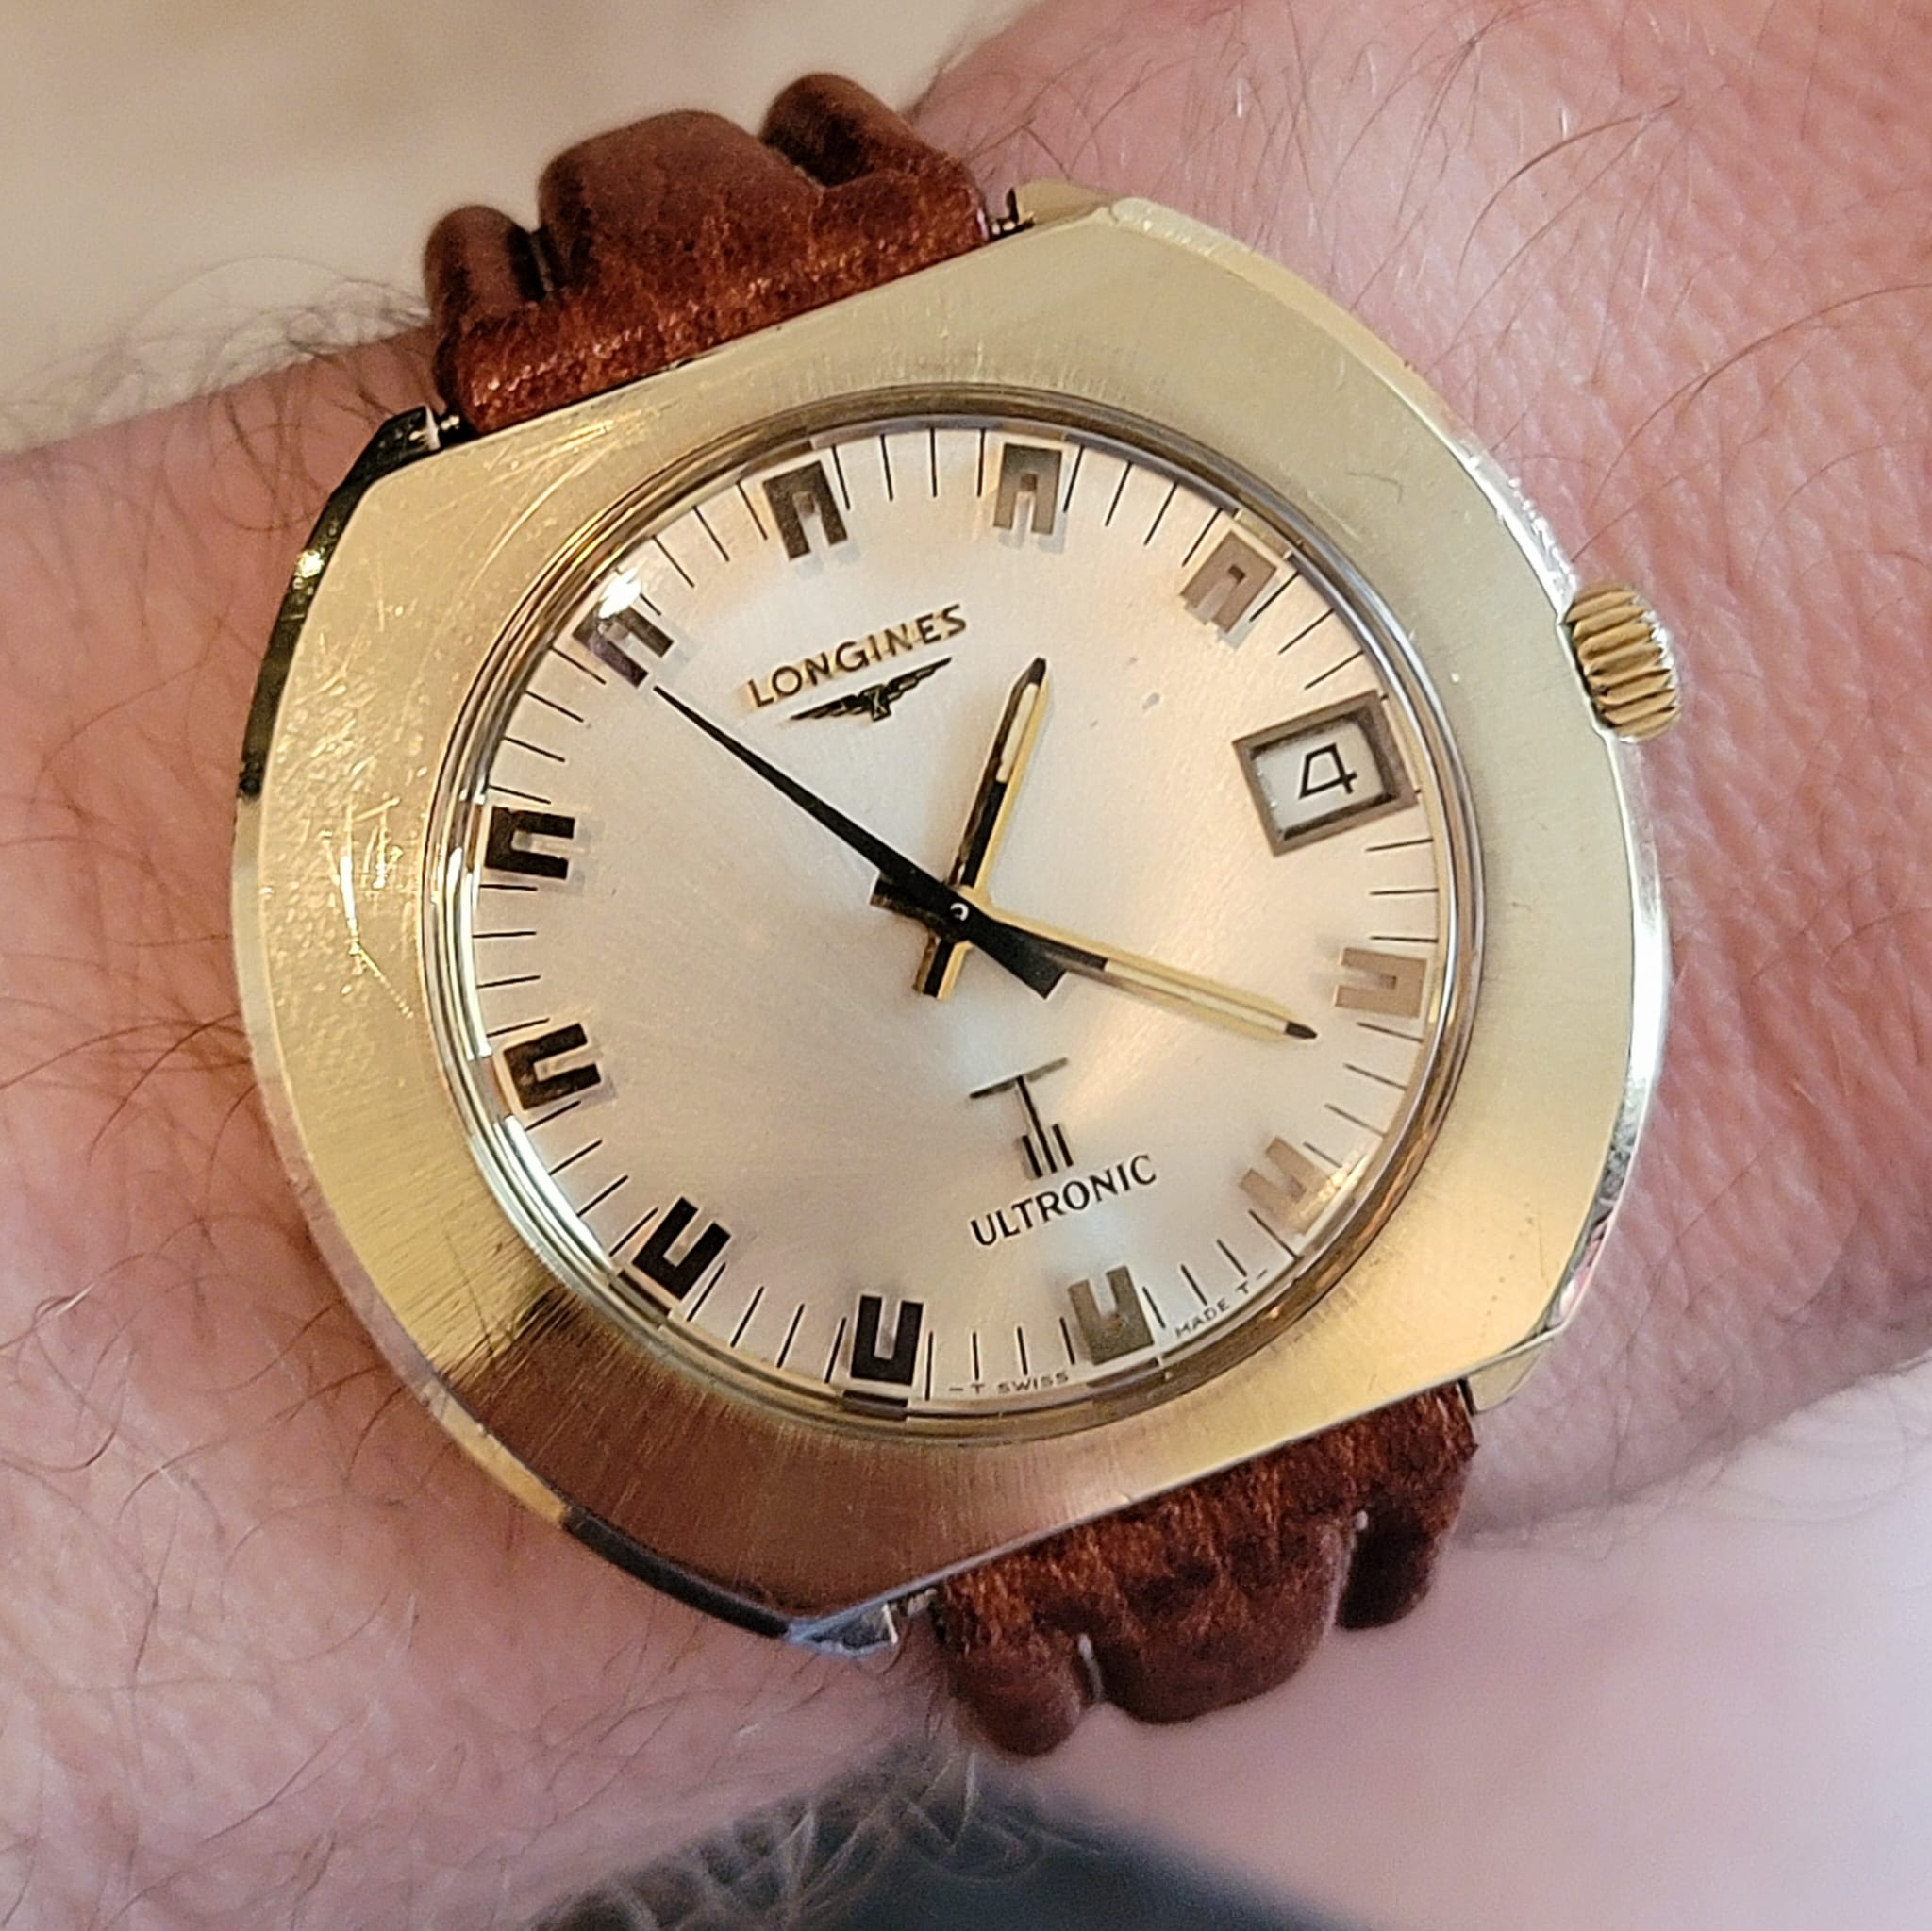 LONGINES ULTRONIC Tuning Fork Watch Ref. 6312 Cal. ESA 9162 Swiss Wristwatch 1970's